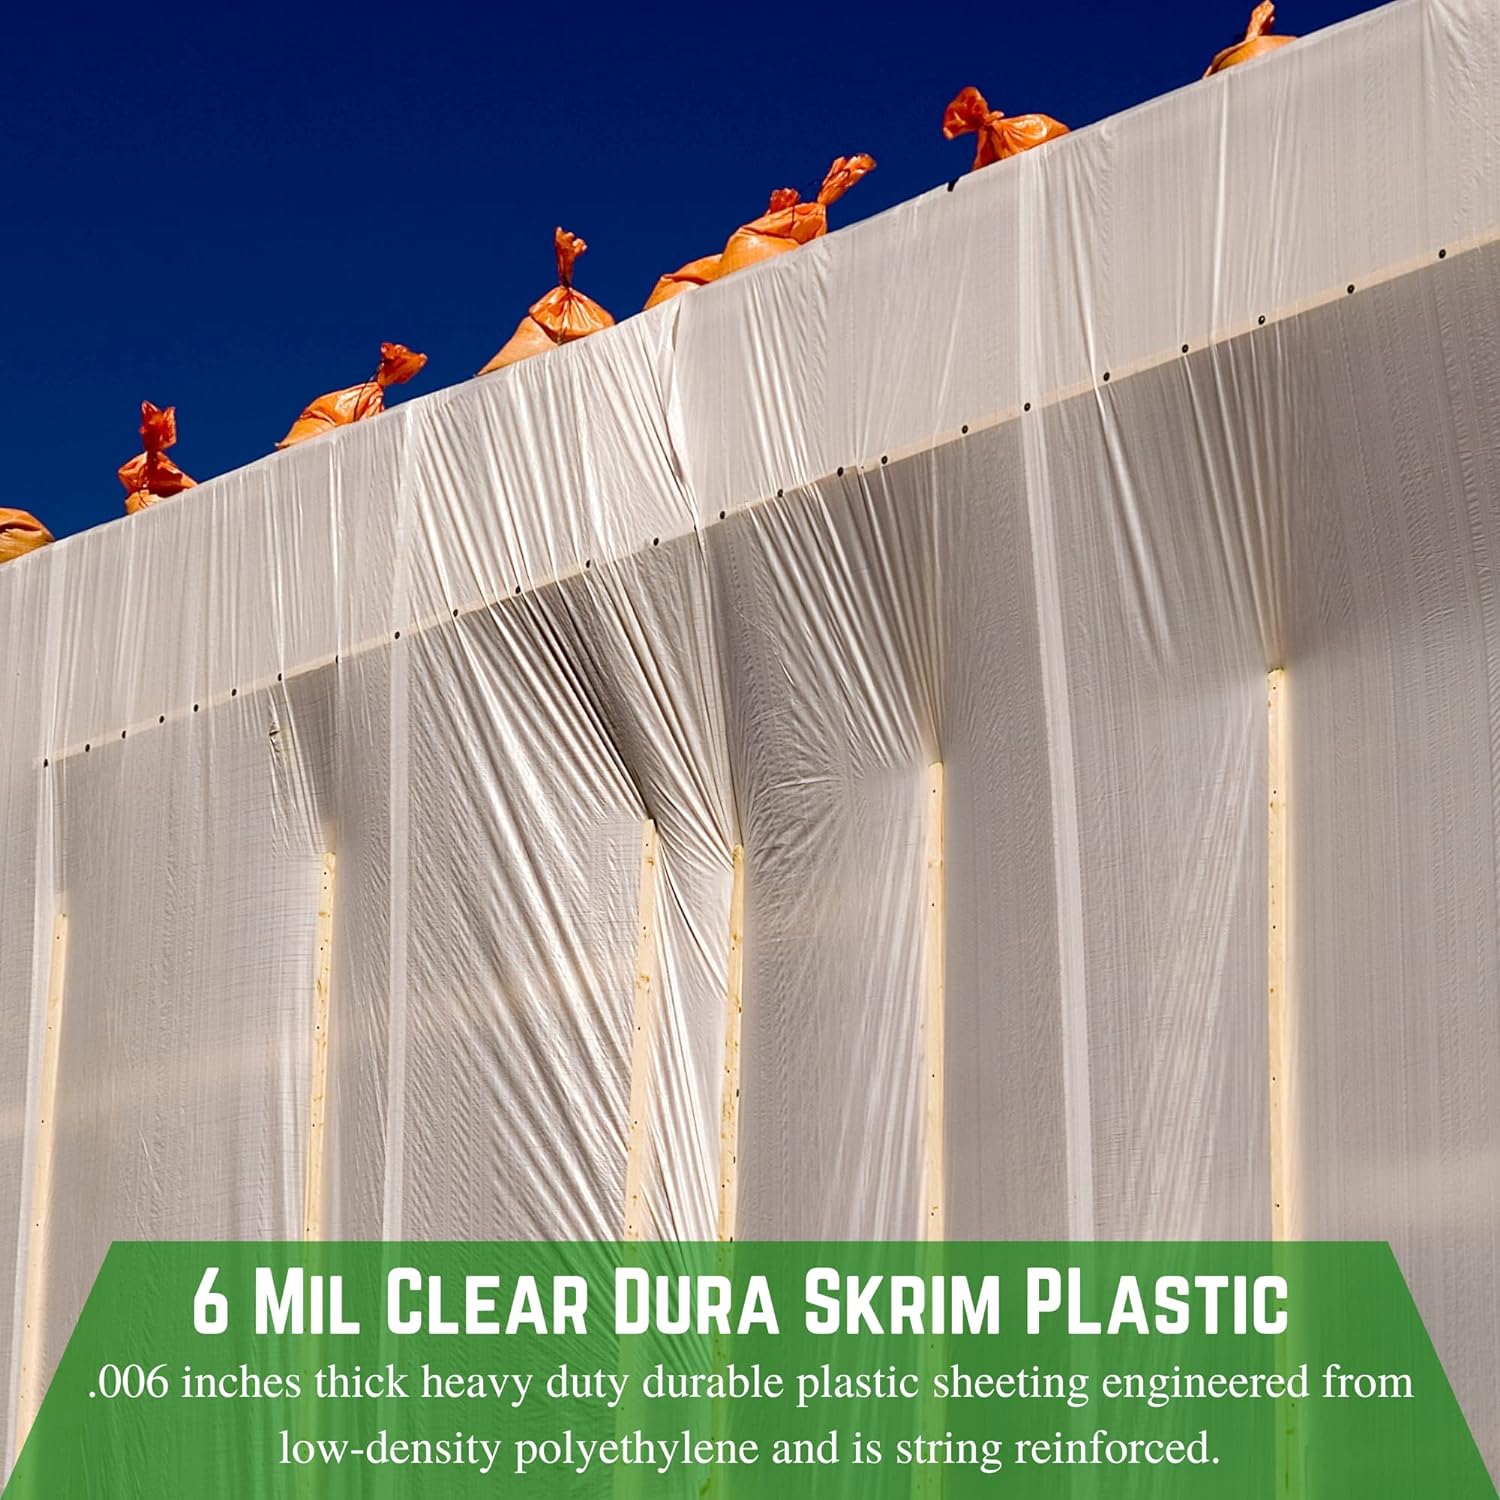 Farm Plastic Supply - Dura Skrim String Reinforced Clear Plastic Sheeting - 6 Mil - (10' x 100') - Reinforced Poly Film Tear Resistant, Weatherproo